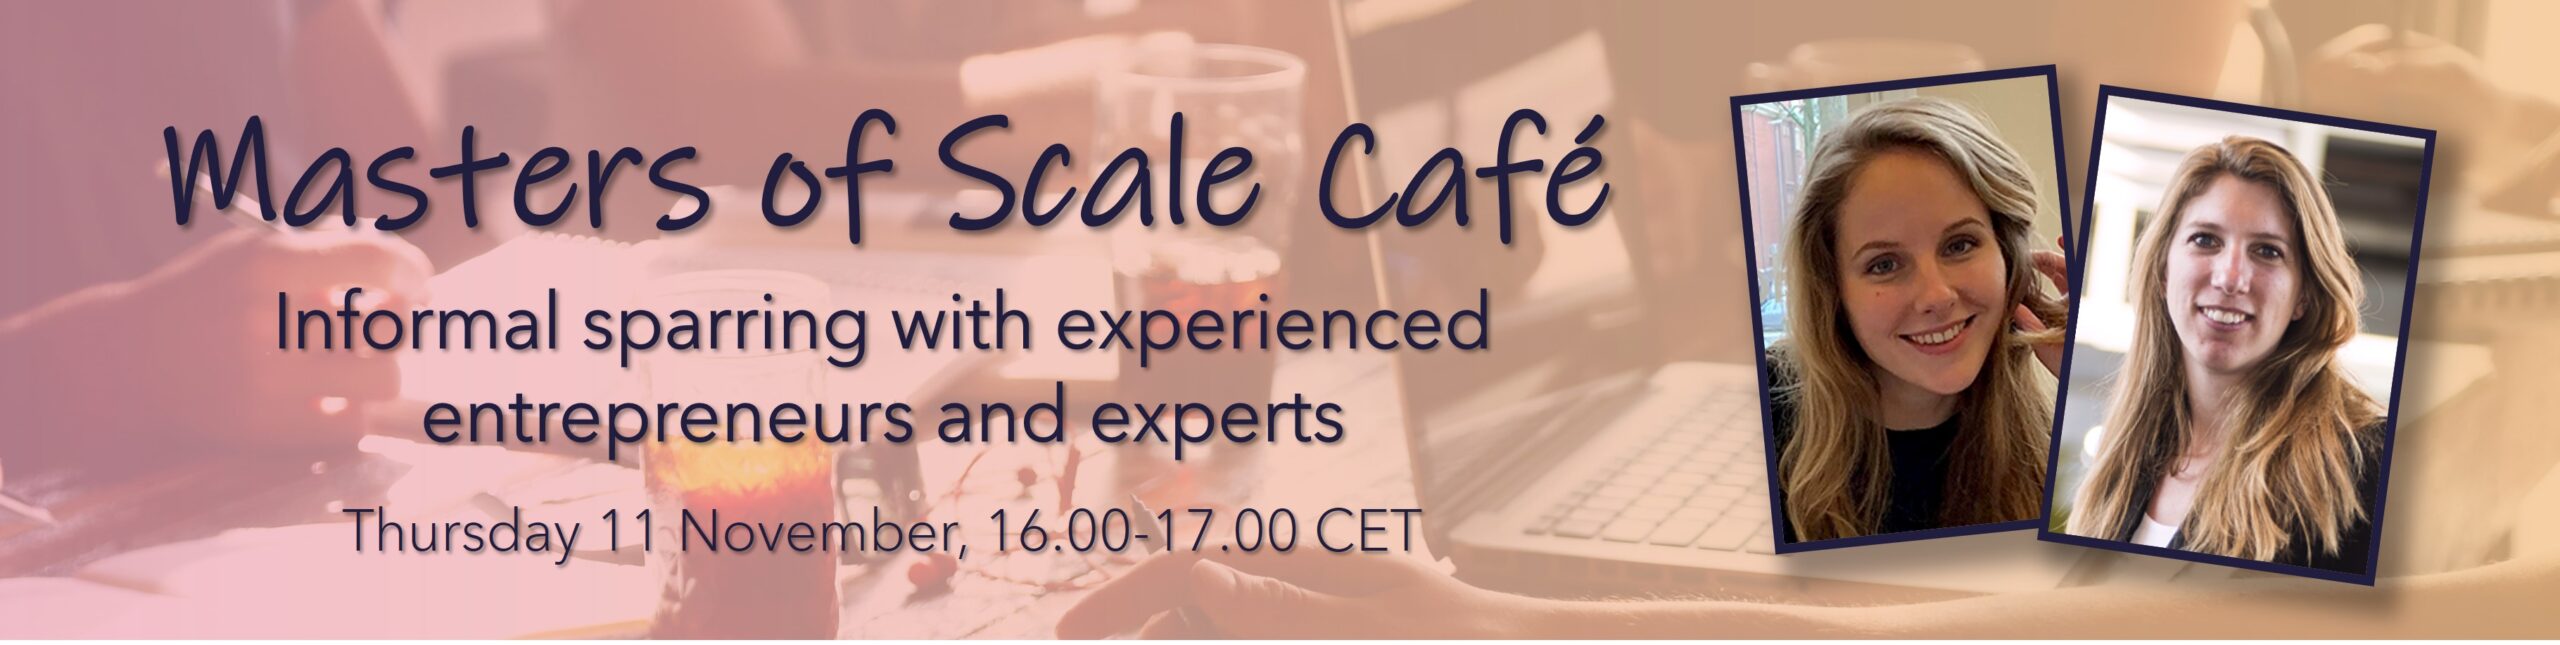 Masters of Scale Café with Yvonne Greeuw & Martine Nieuwenhuizen, Delft Enterprises